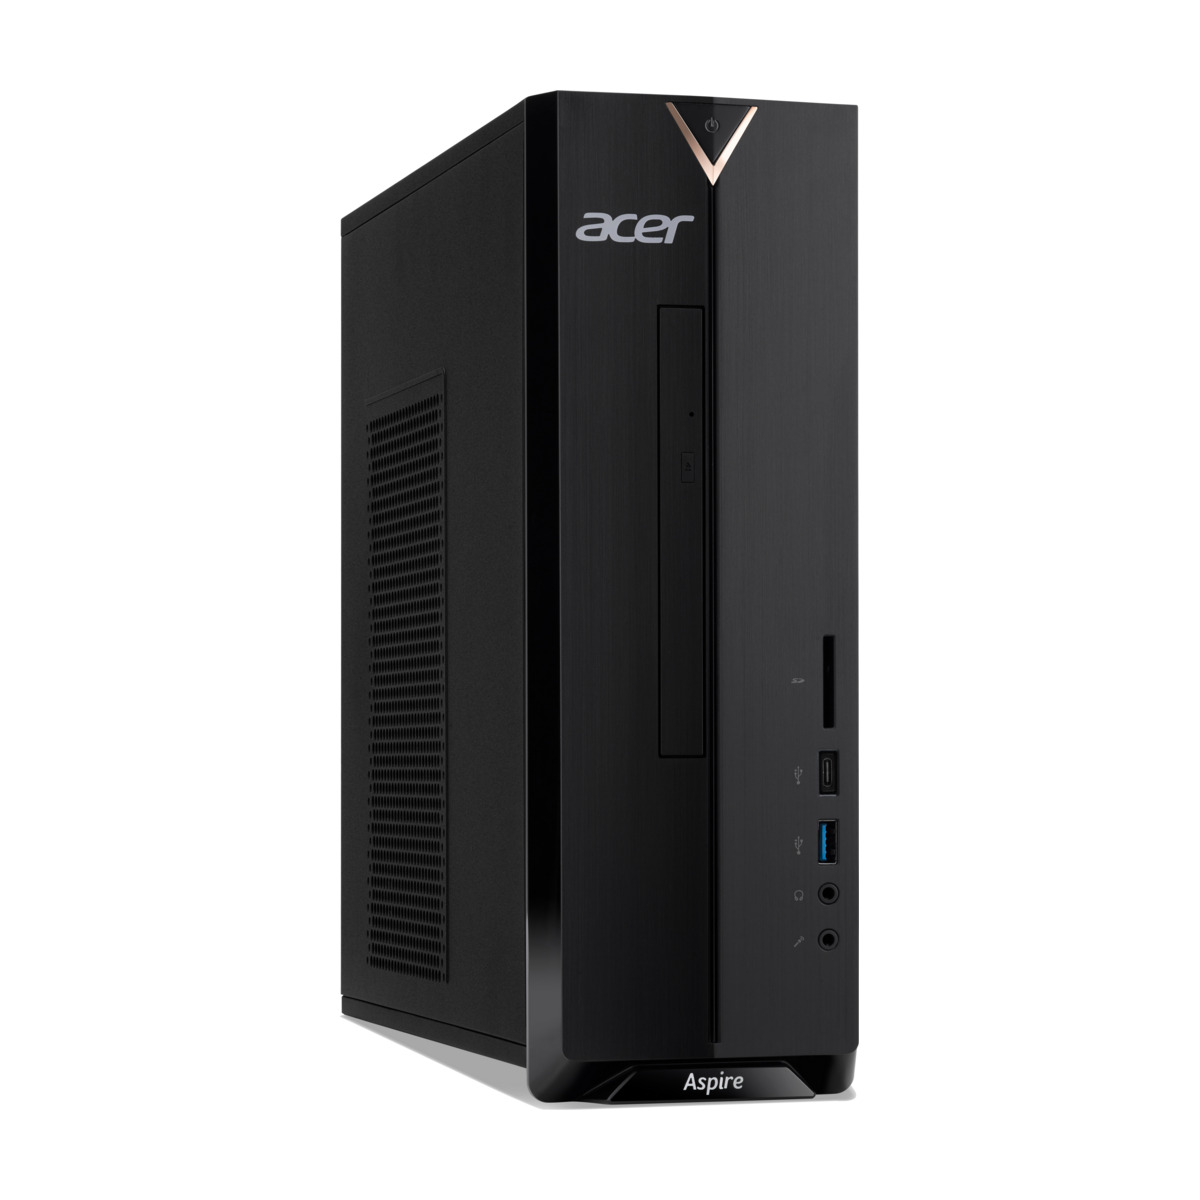 Acer Aspire Xc-840 stationær PC